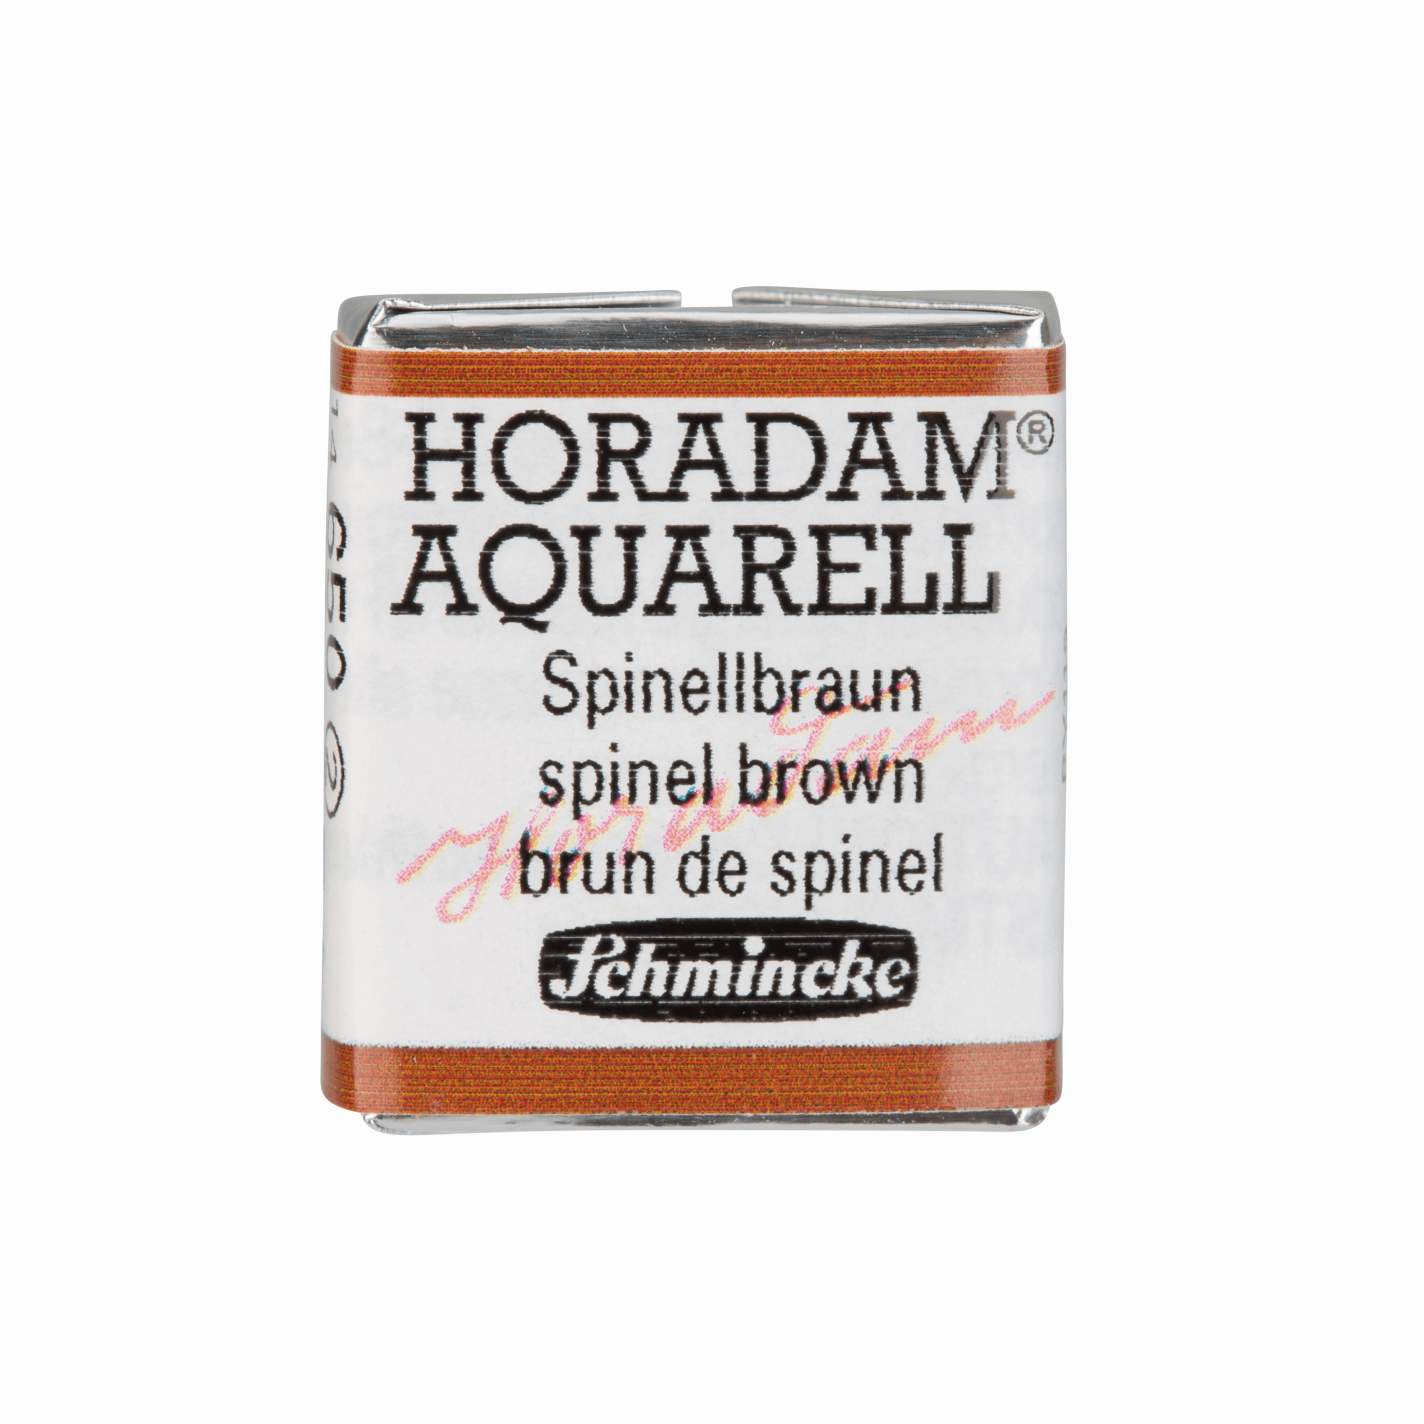 Schmincke Horadam Aquarell pans 1/2 pan Spinel Brown